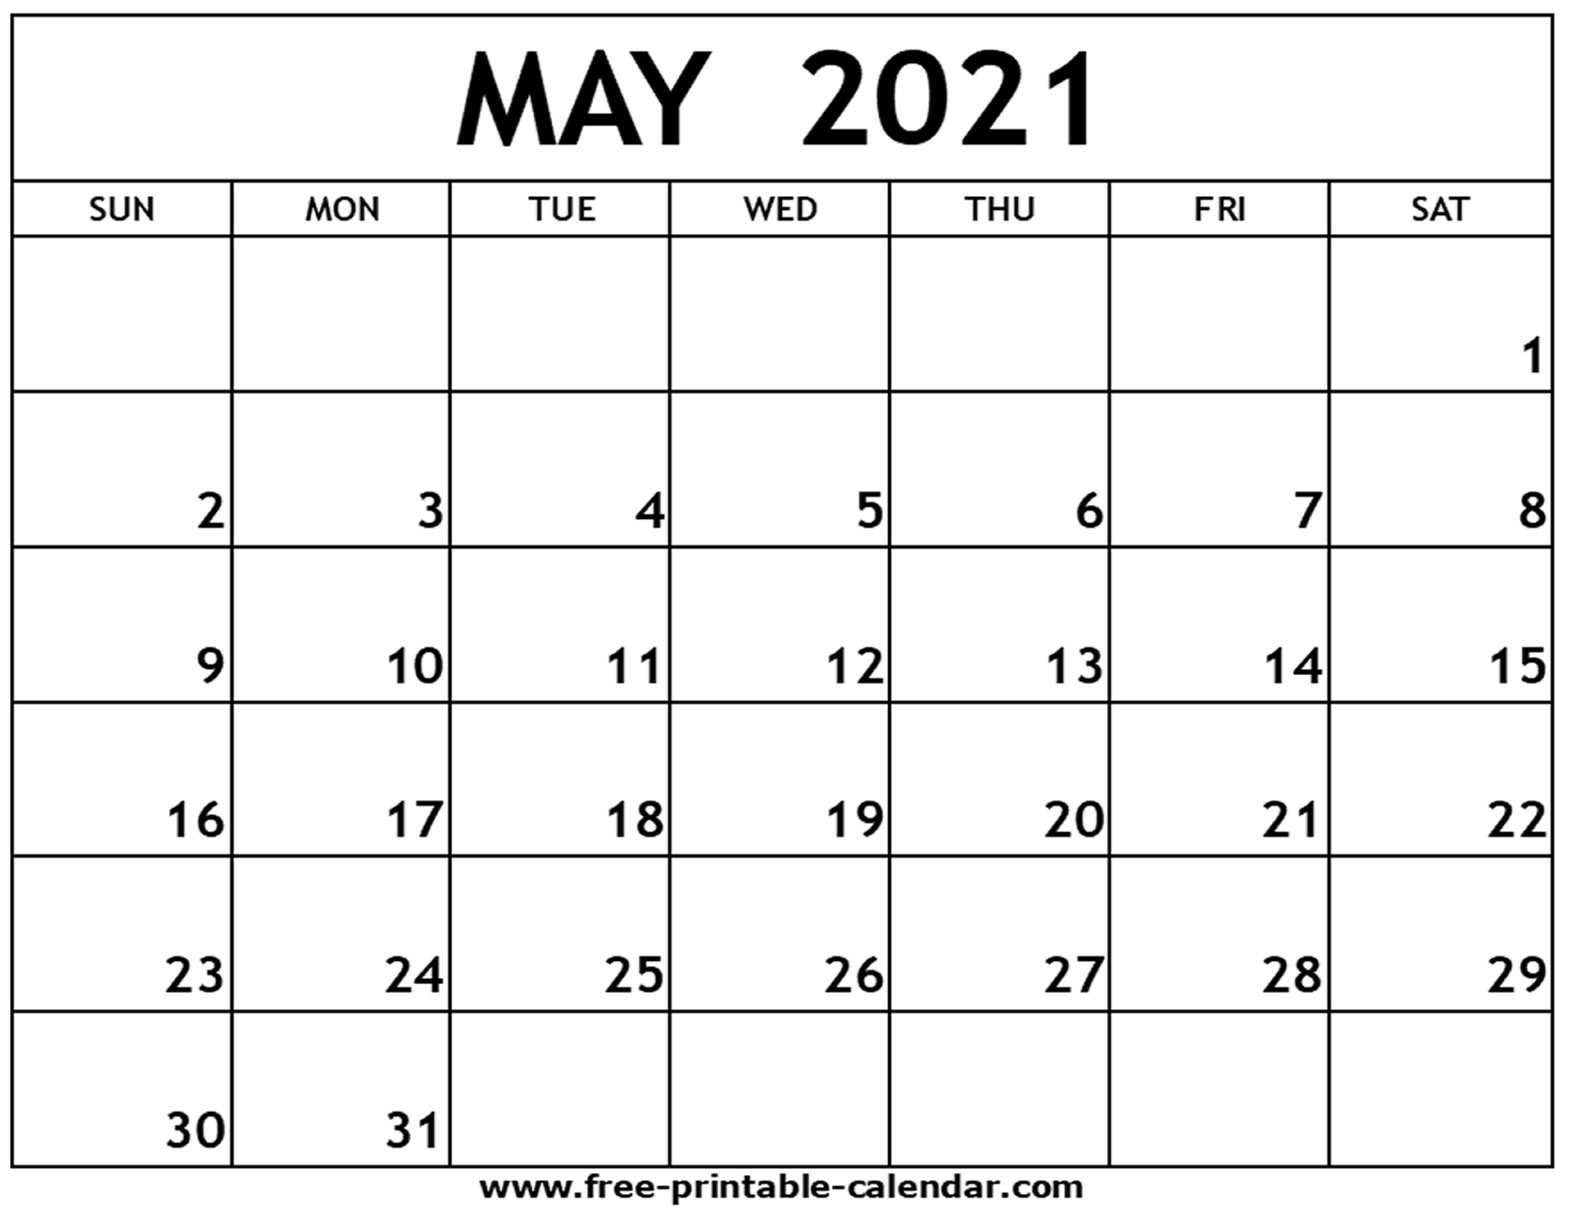 May 2021 Printable Calendar - Free-Printable-Calendar